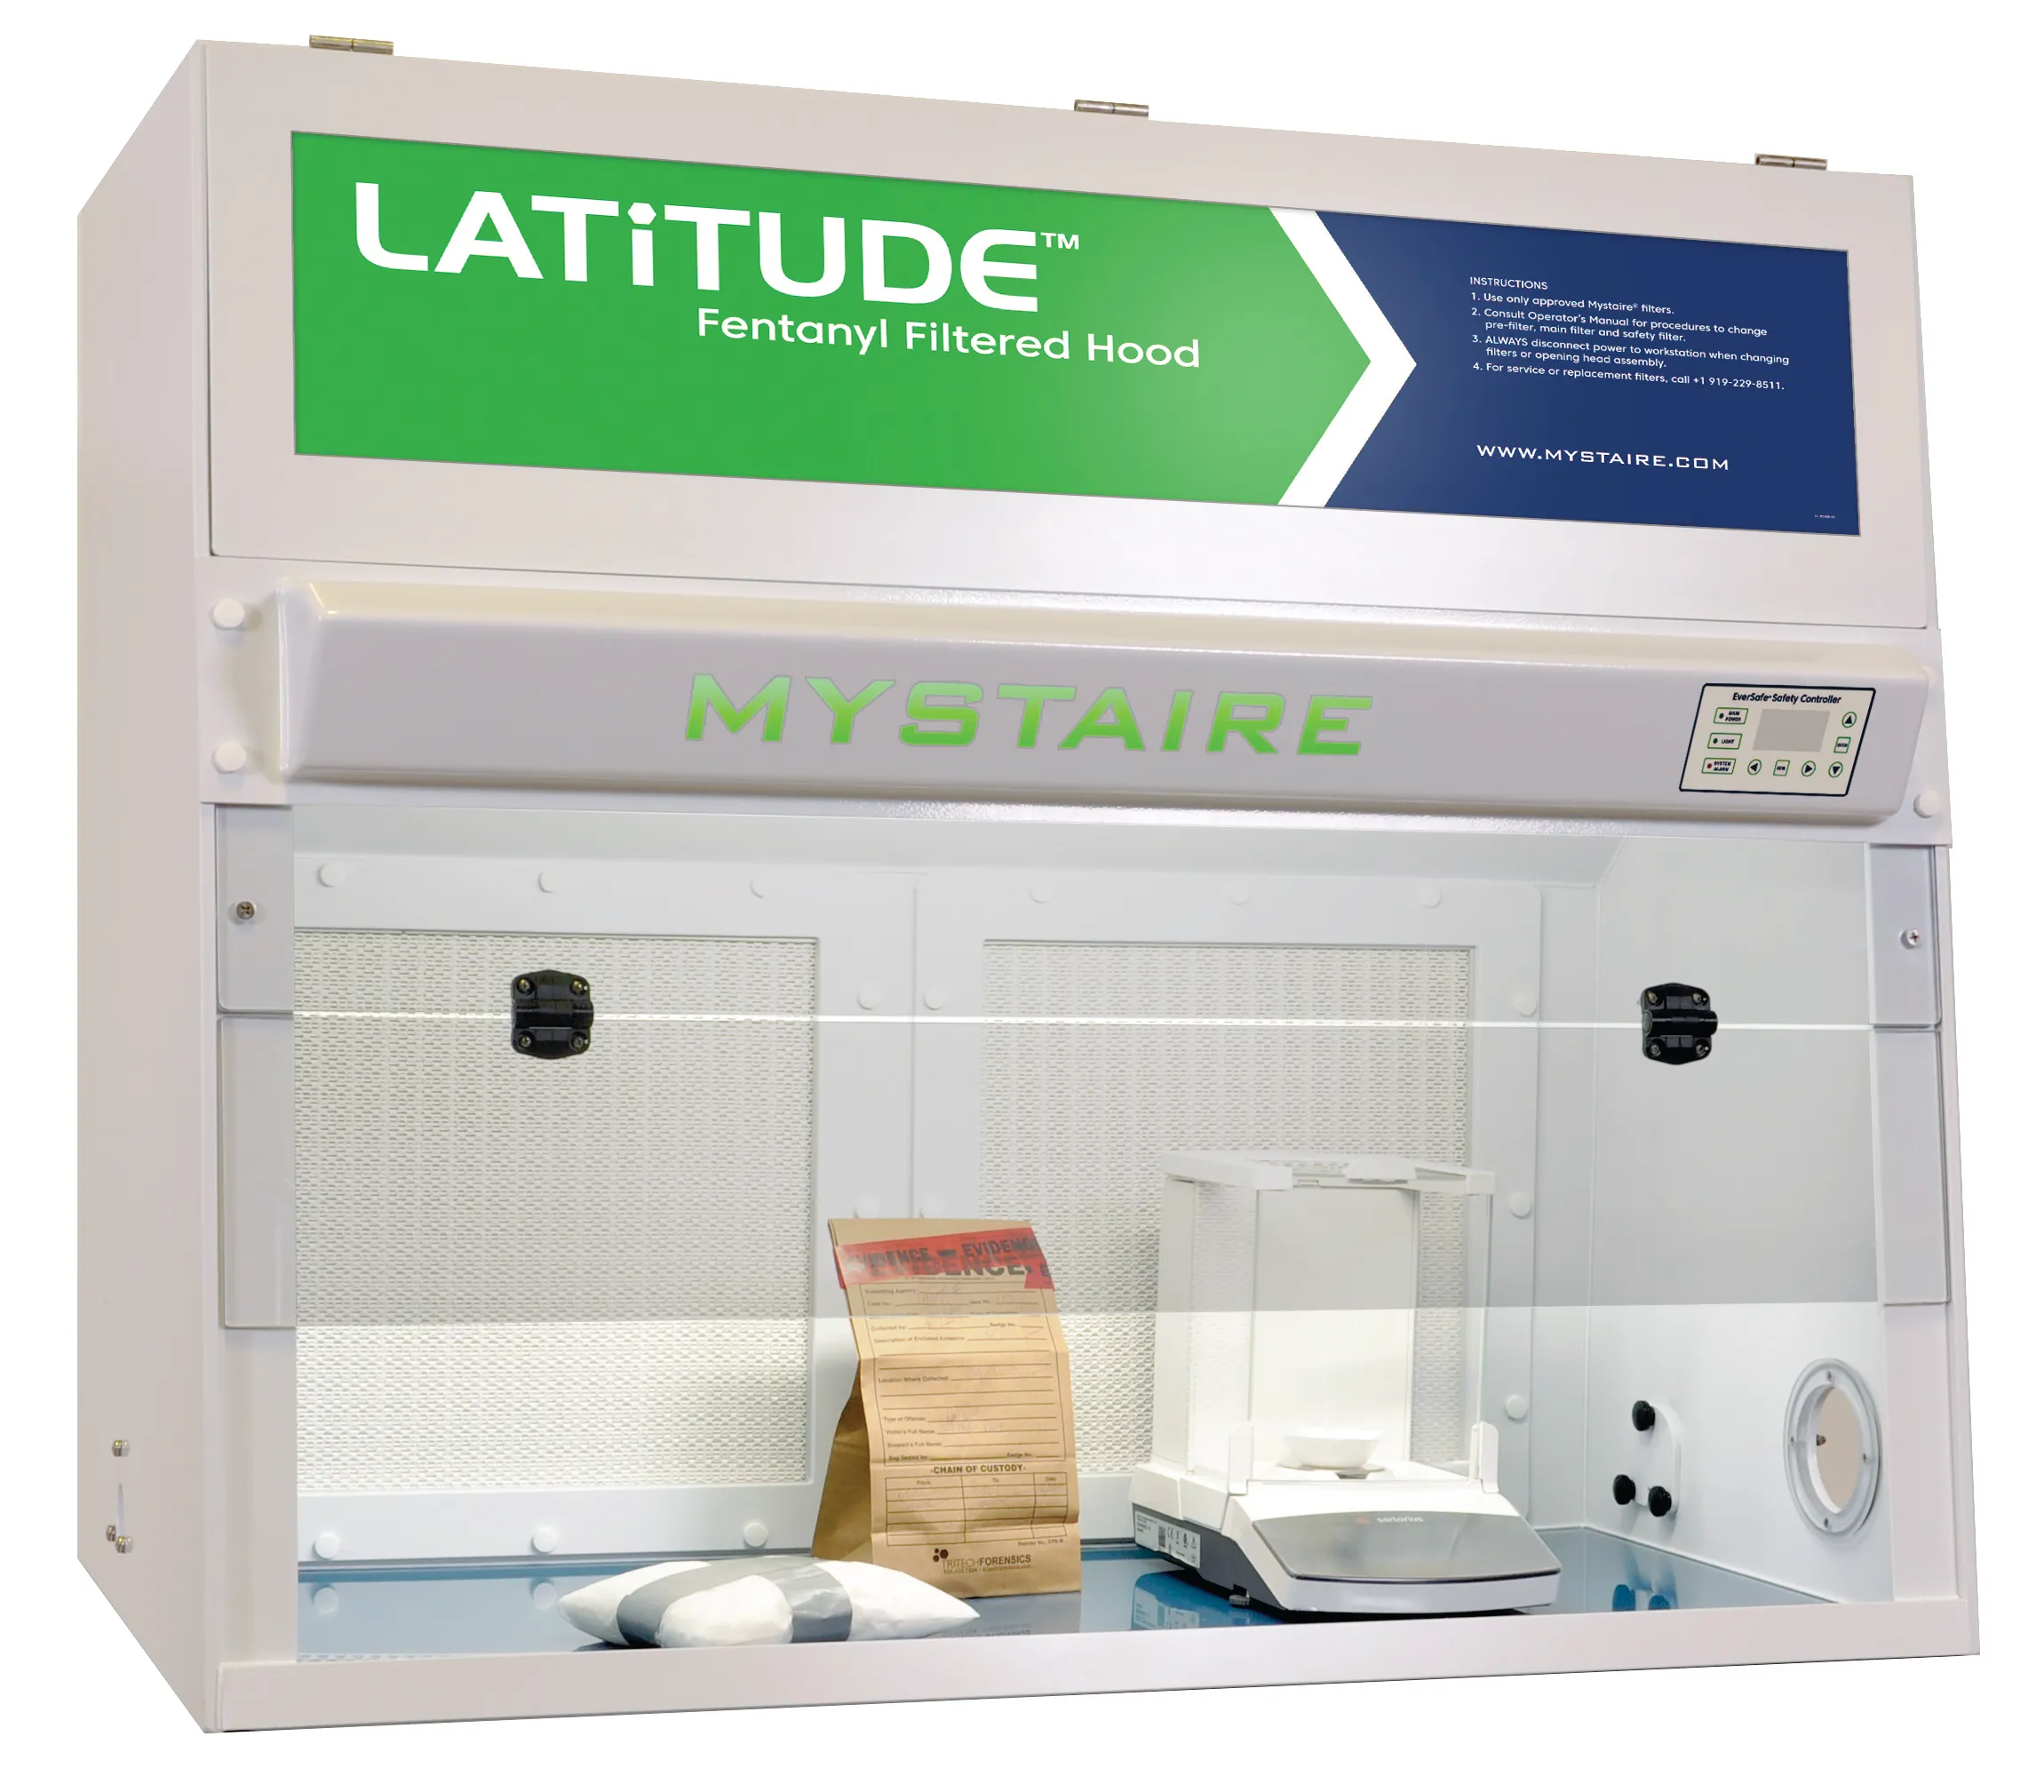 Mystaire- Latitude Fentanyl Filtered Hood